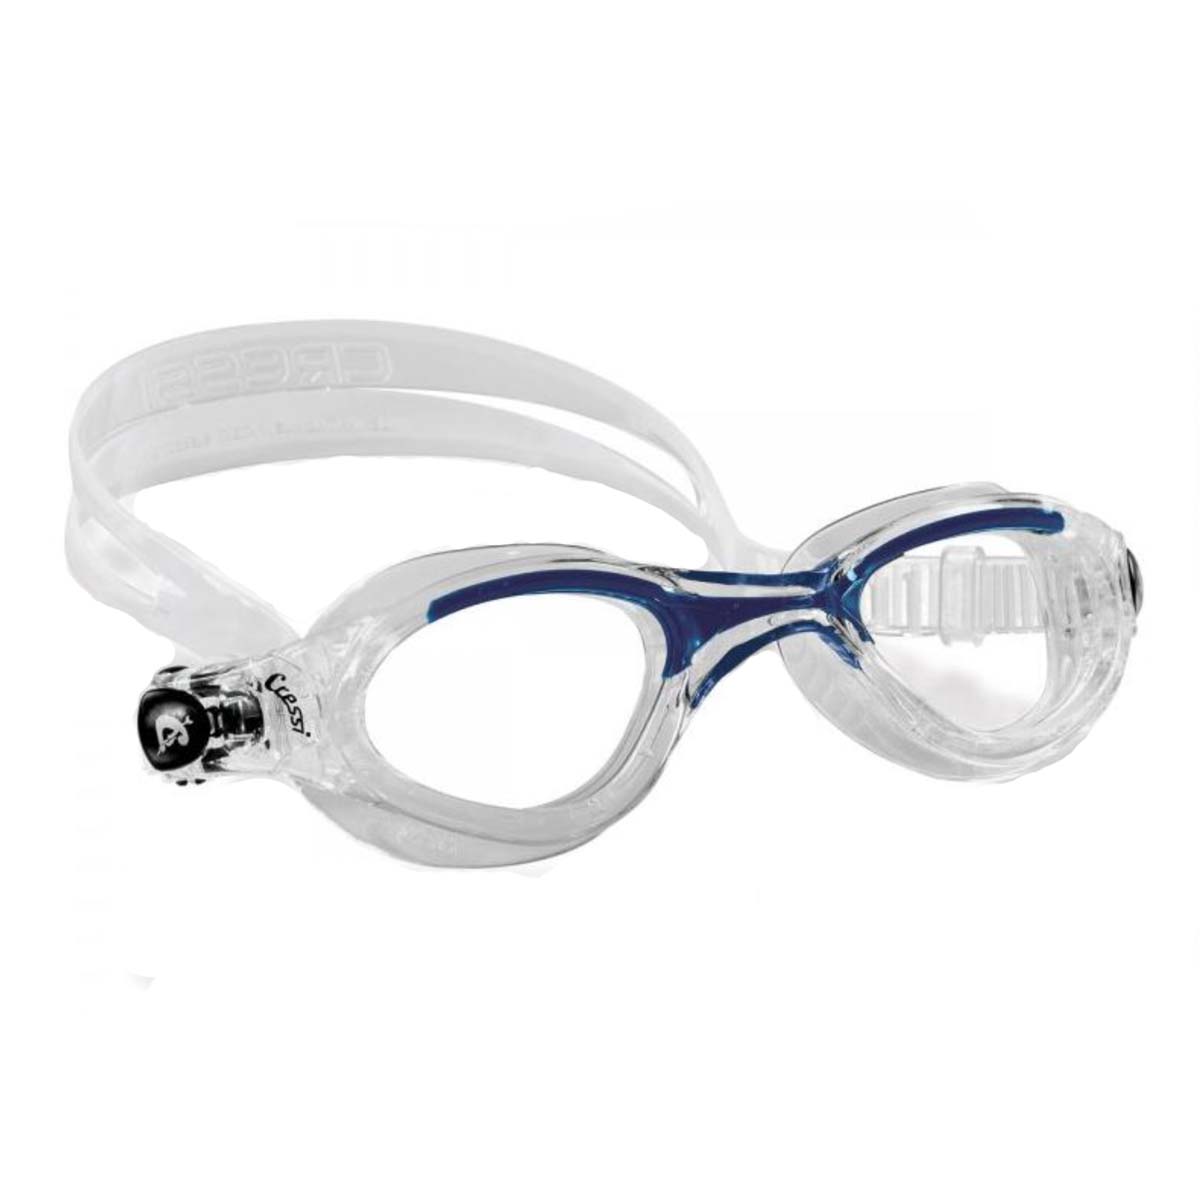 Очки флеша. Очки Cressi Flash. Очки для плавания Cressi Flash. Очки для плавания Cressi Fox. Cressi детские очки для плаванья.